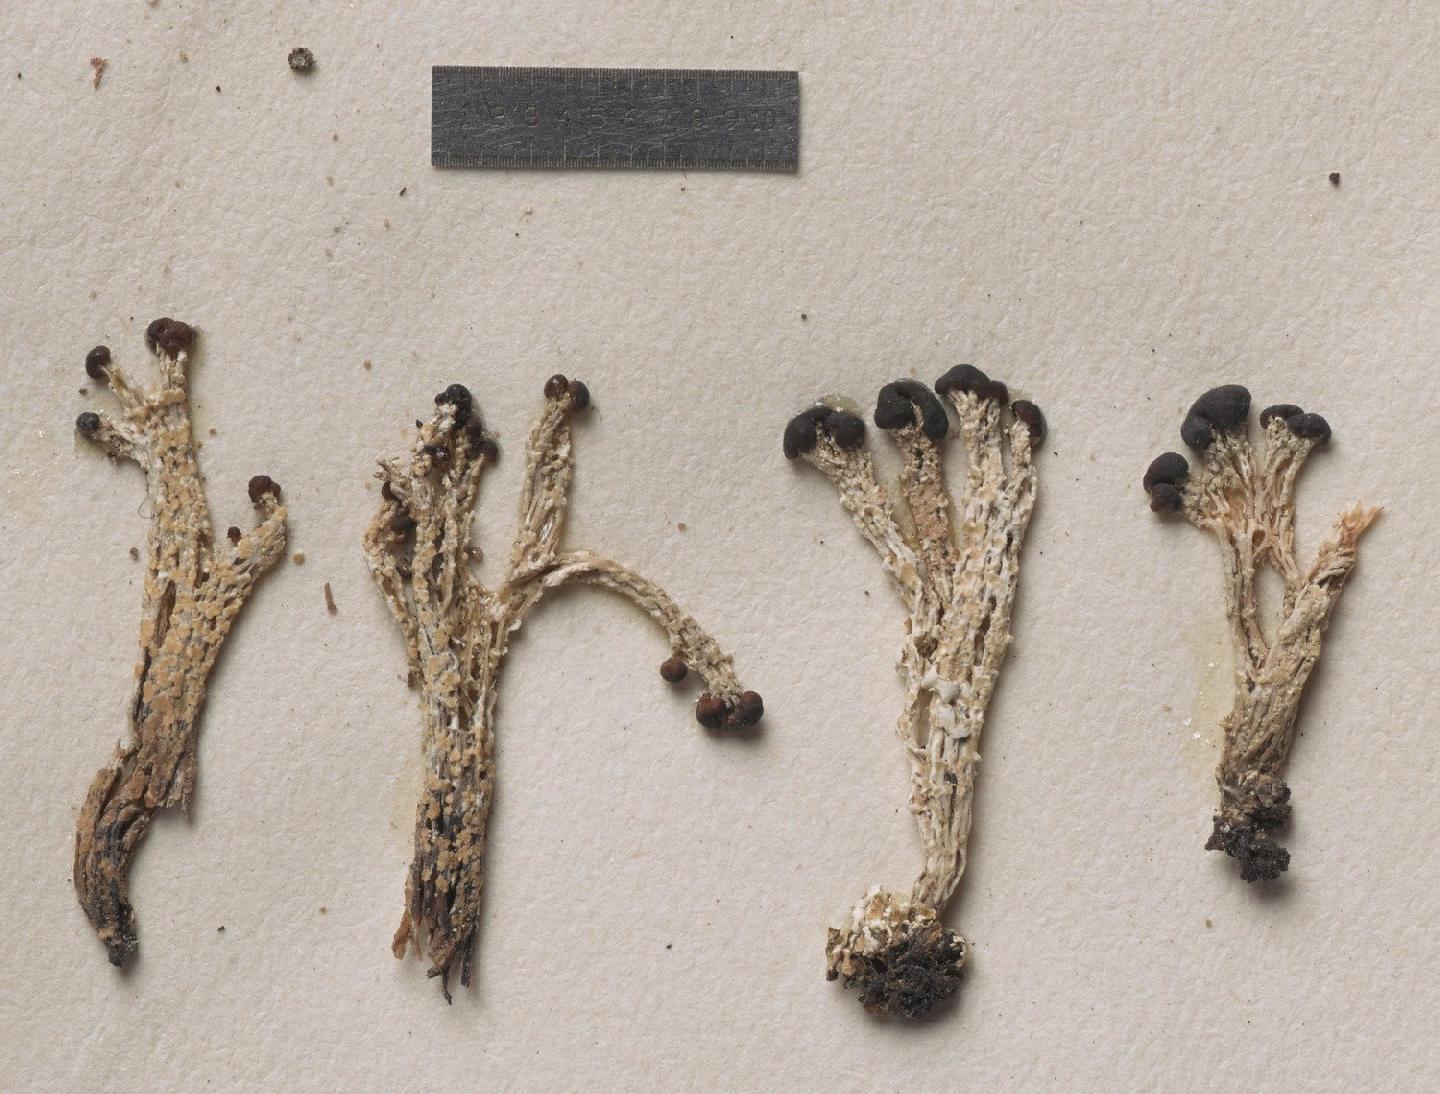 To NHMUK collection (Cladonia cariosa (Ach.) Spreng.; Isolectotype; NHMUK:ecatalogue:2906804)